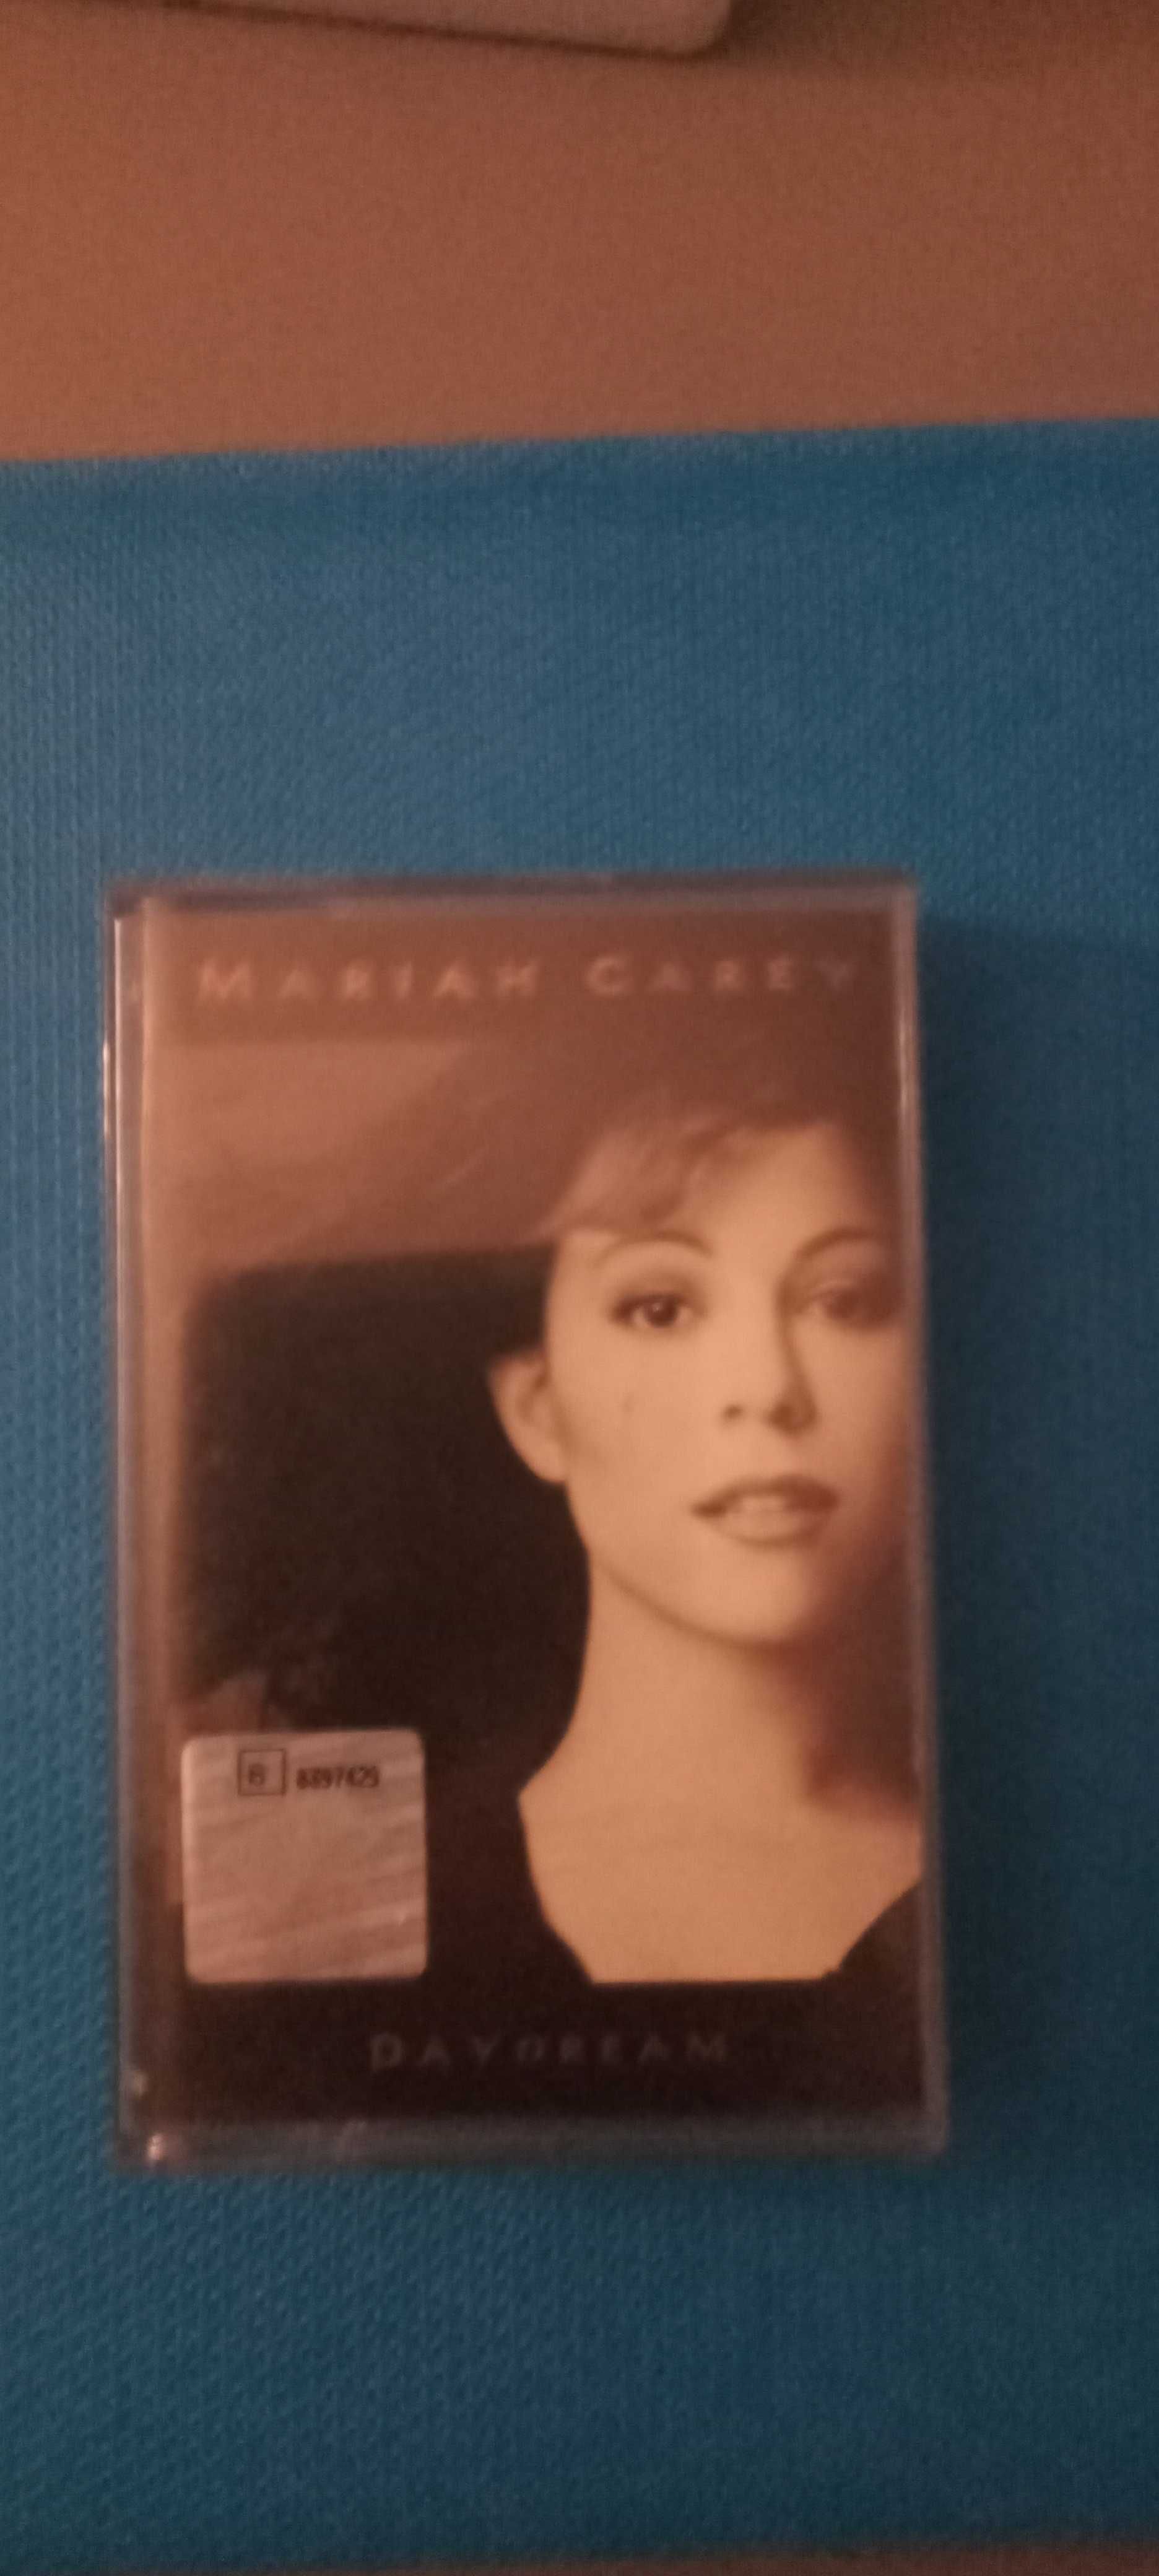 Mariah Carey "DayDream" kaseta, stan bdb, używana